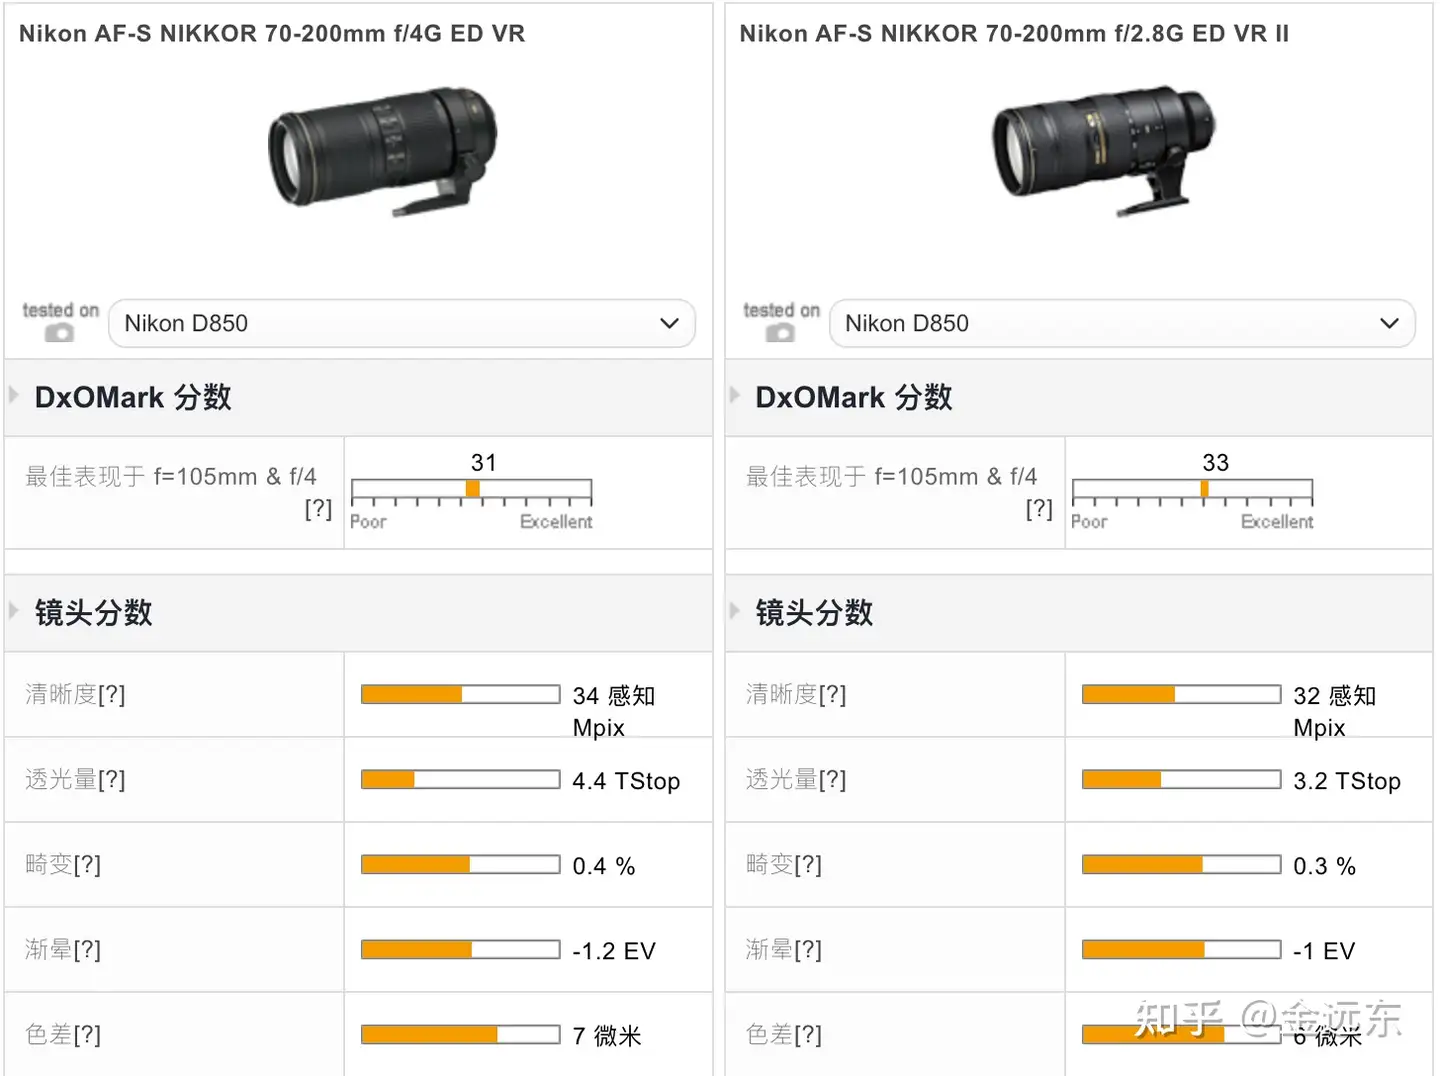 尼康70-200mm f/4G ED VR 对比尼康70-200mm f/2.8G ED VR II - 知乎